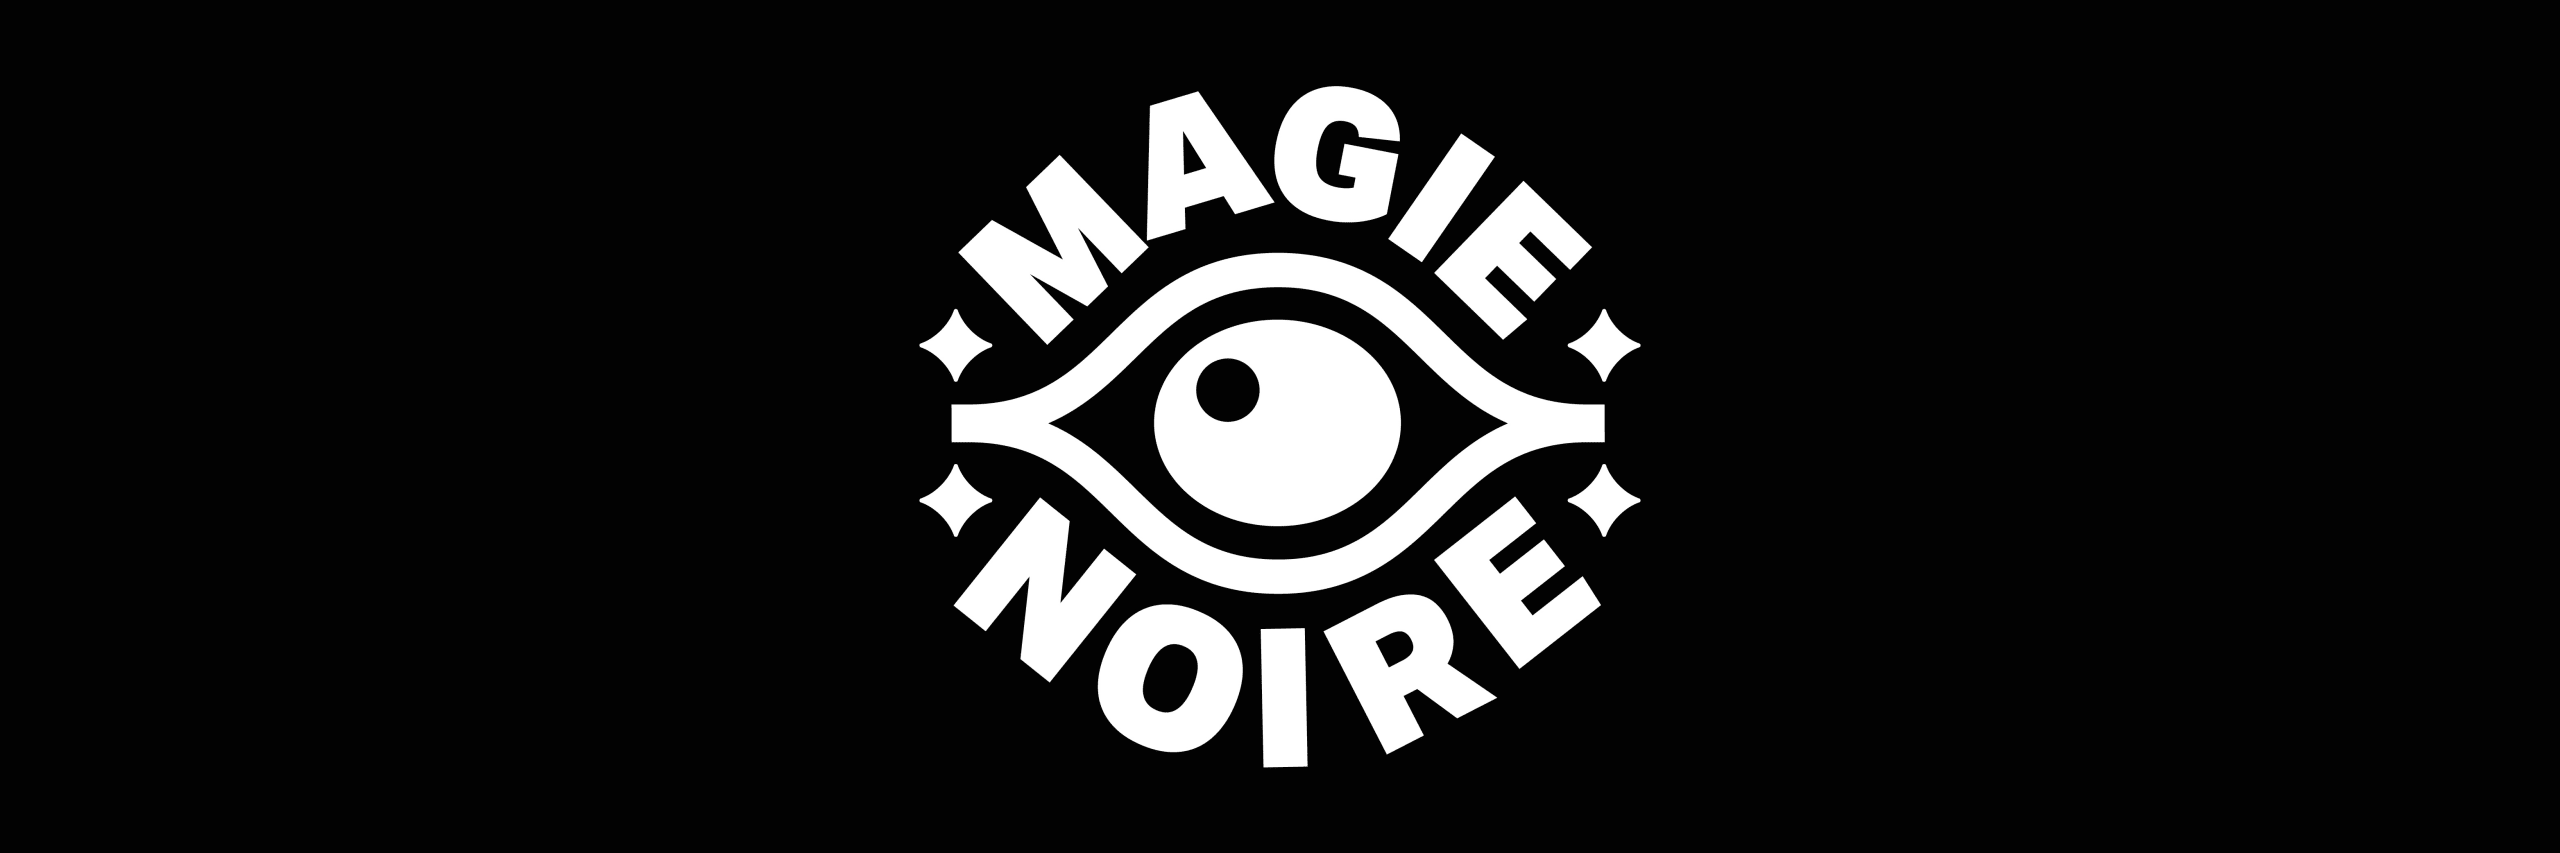 Magie Noire Upcoming Music Events & Tickets · Shotgun